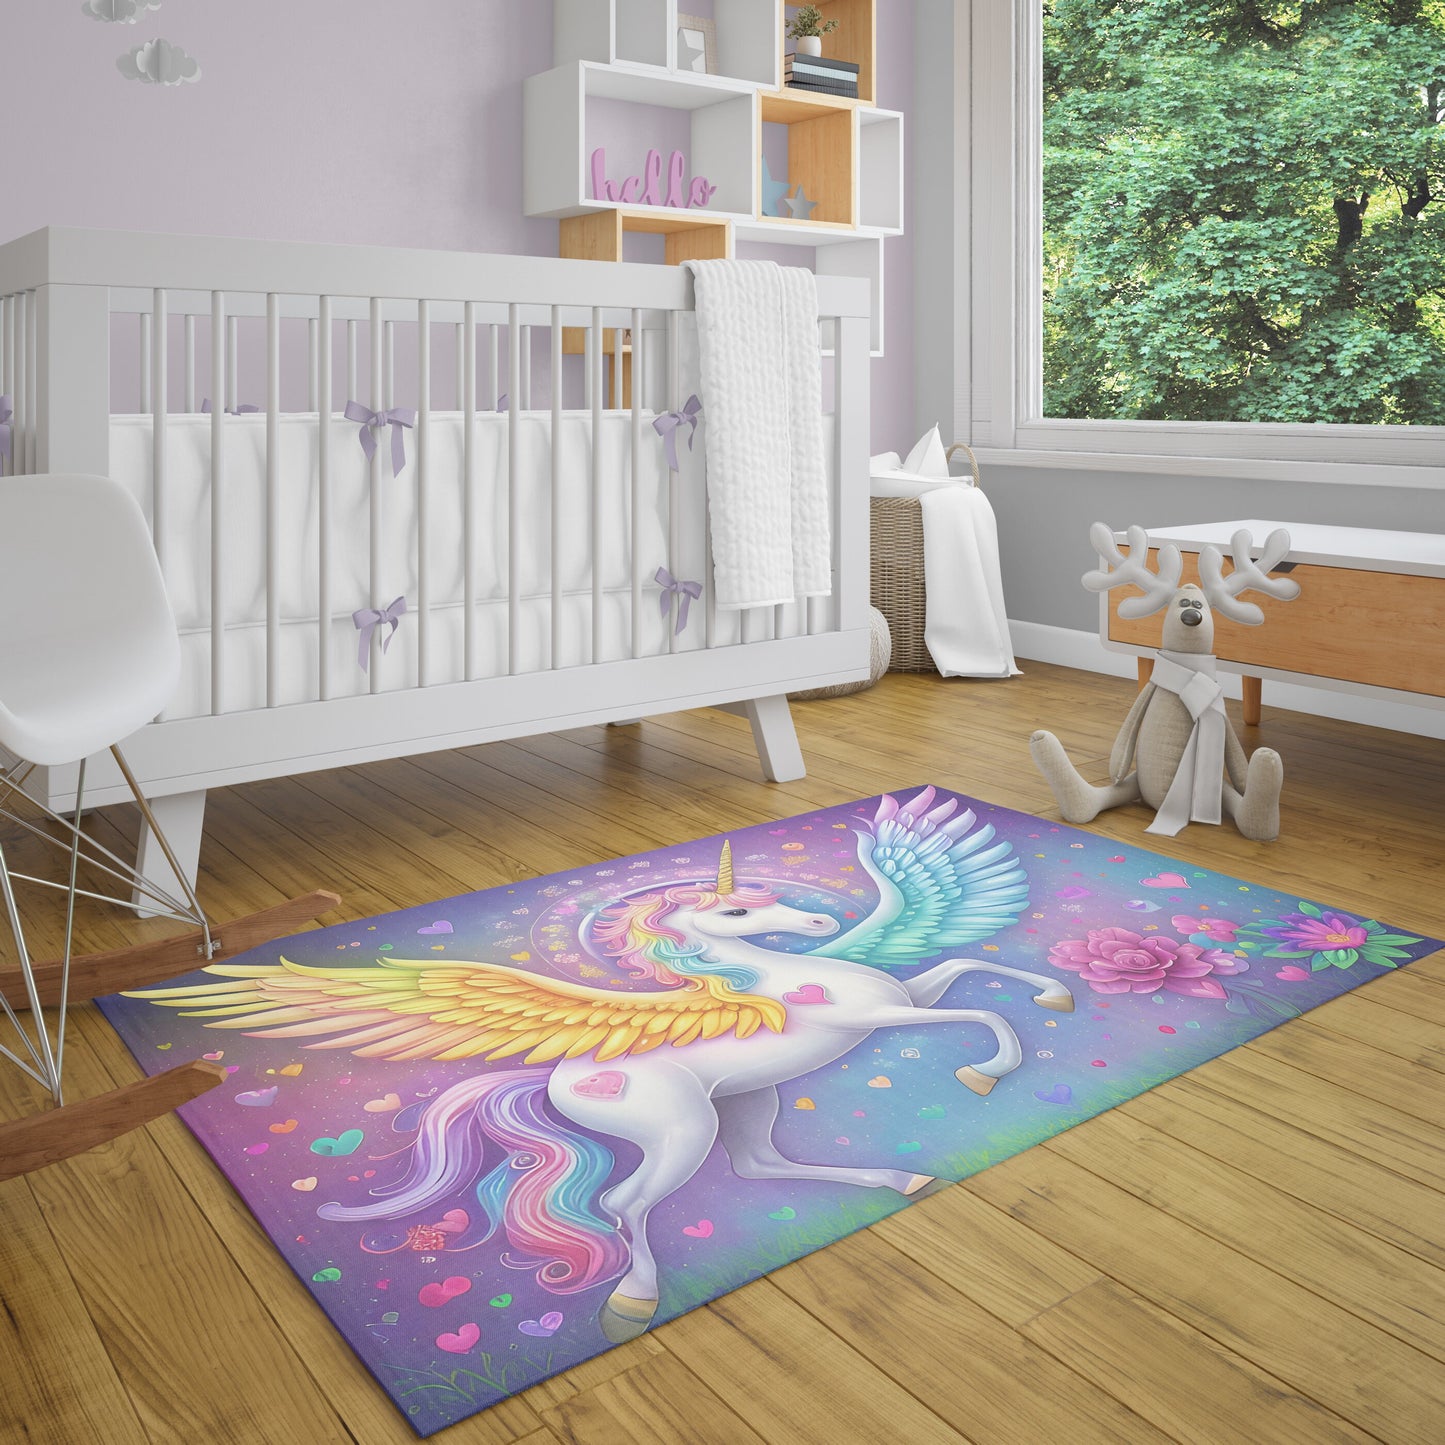 Unicorn Rug rainbow Rug colorful Rug unicorns hearts flowers Floor Rugs 3'x5' 4'x6' 5'x7' Large rugs Pink Purple